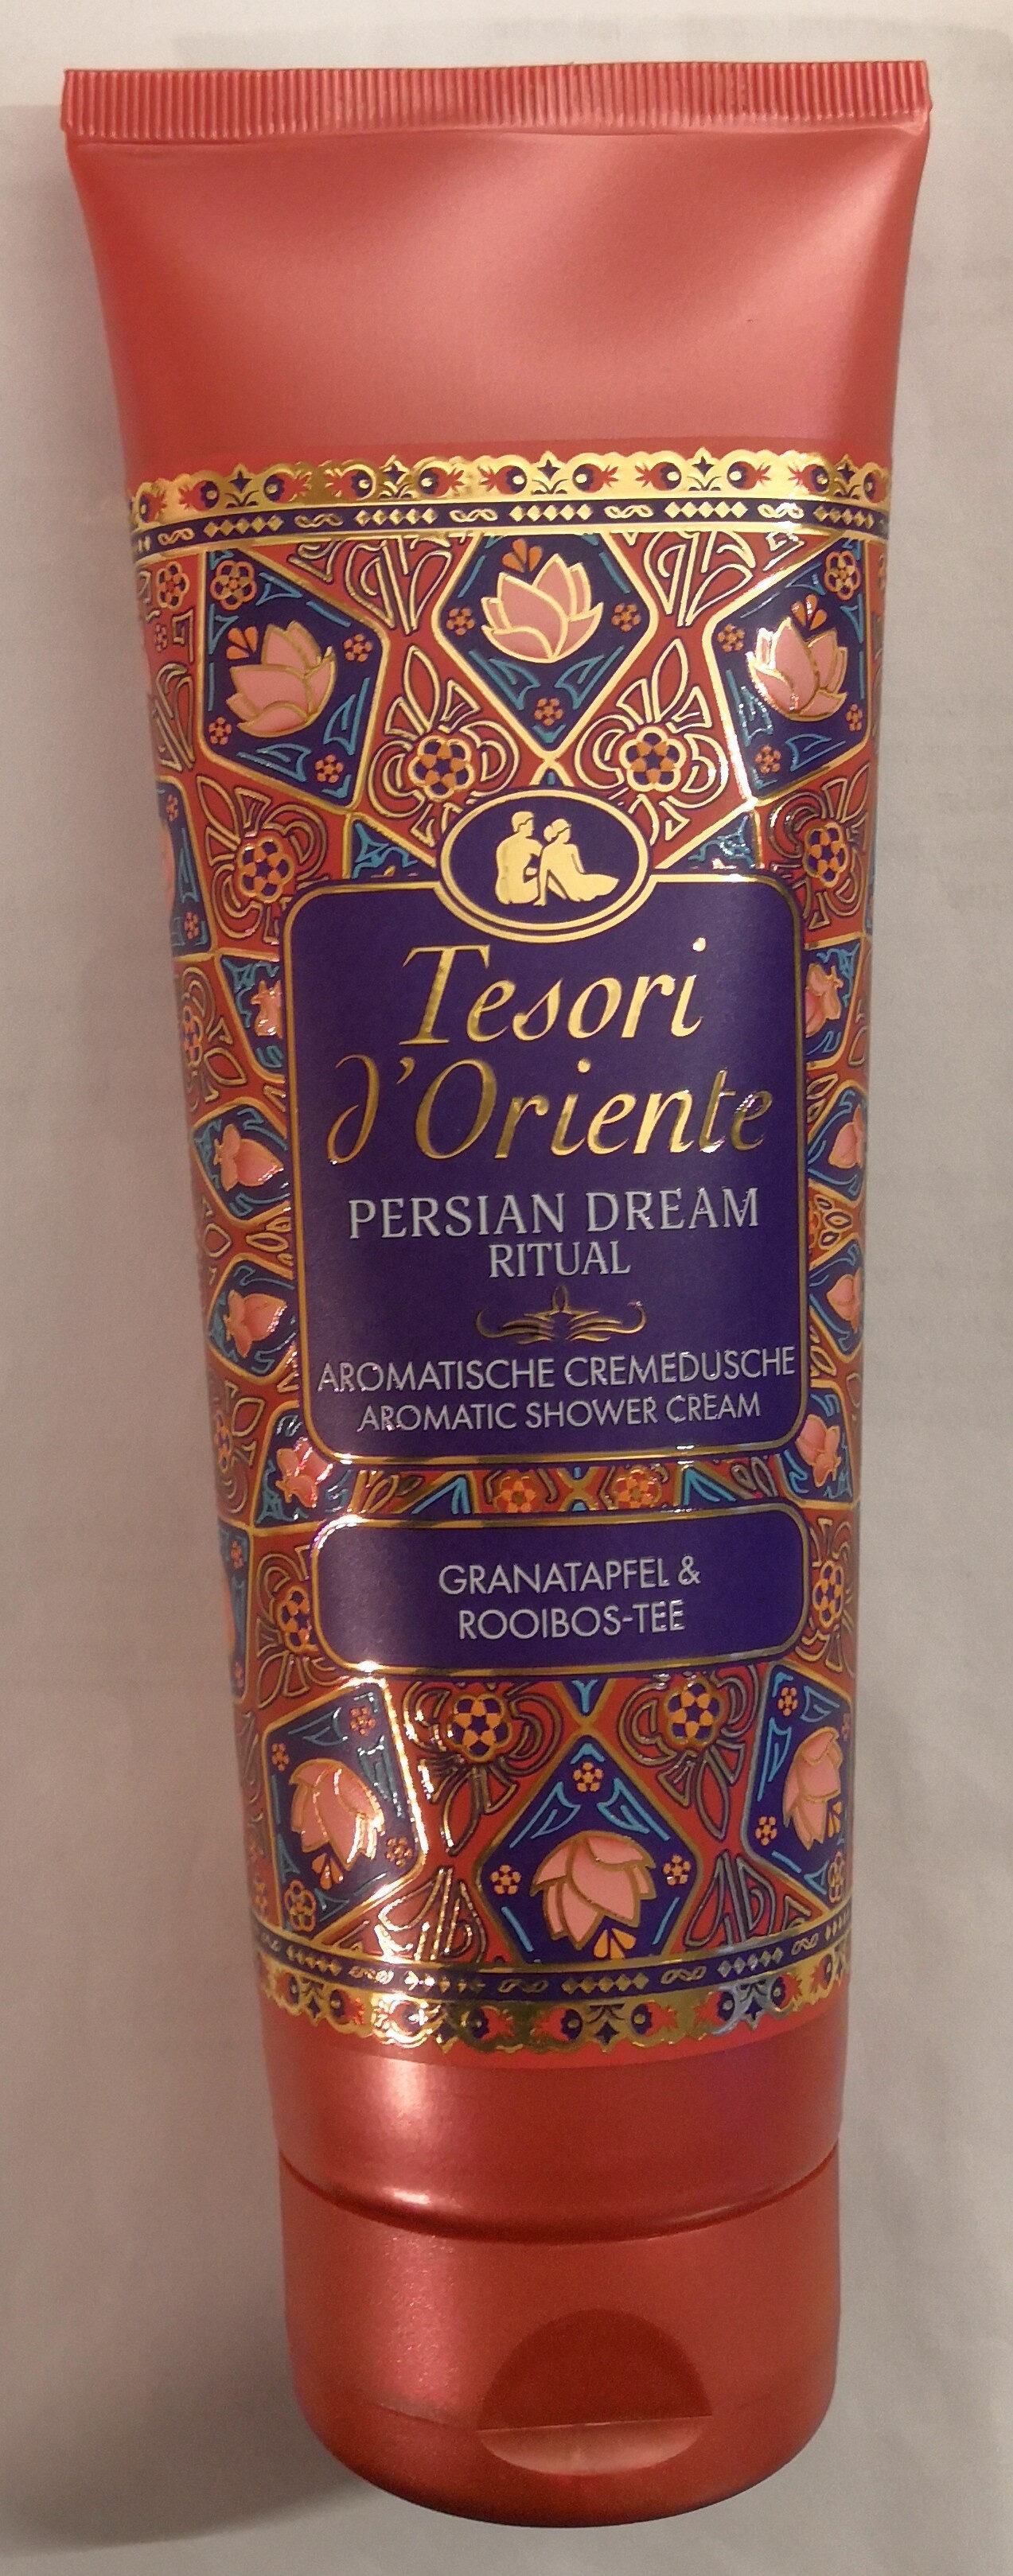 Persian Dream Ritual Granatapfel & Rooibos-Tee - Продукт - de